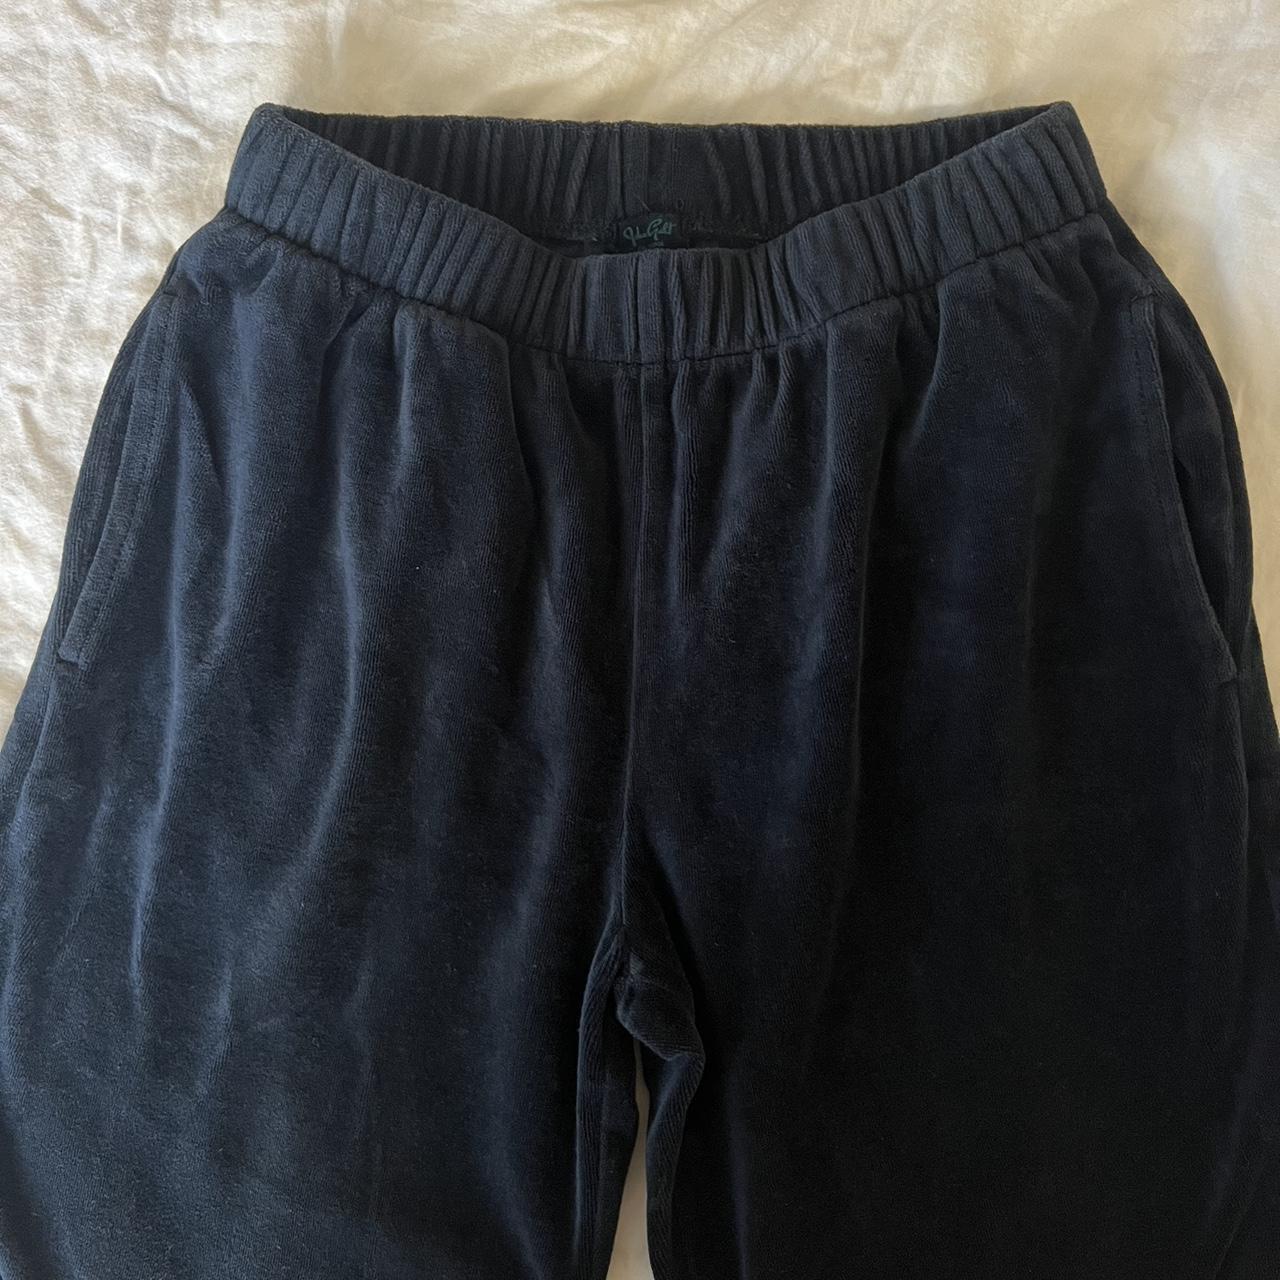 Brandy Melville navy blue velvet sweatpants. - Depop